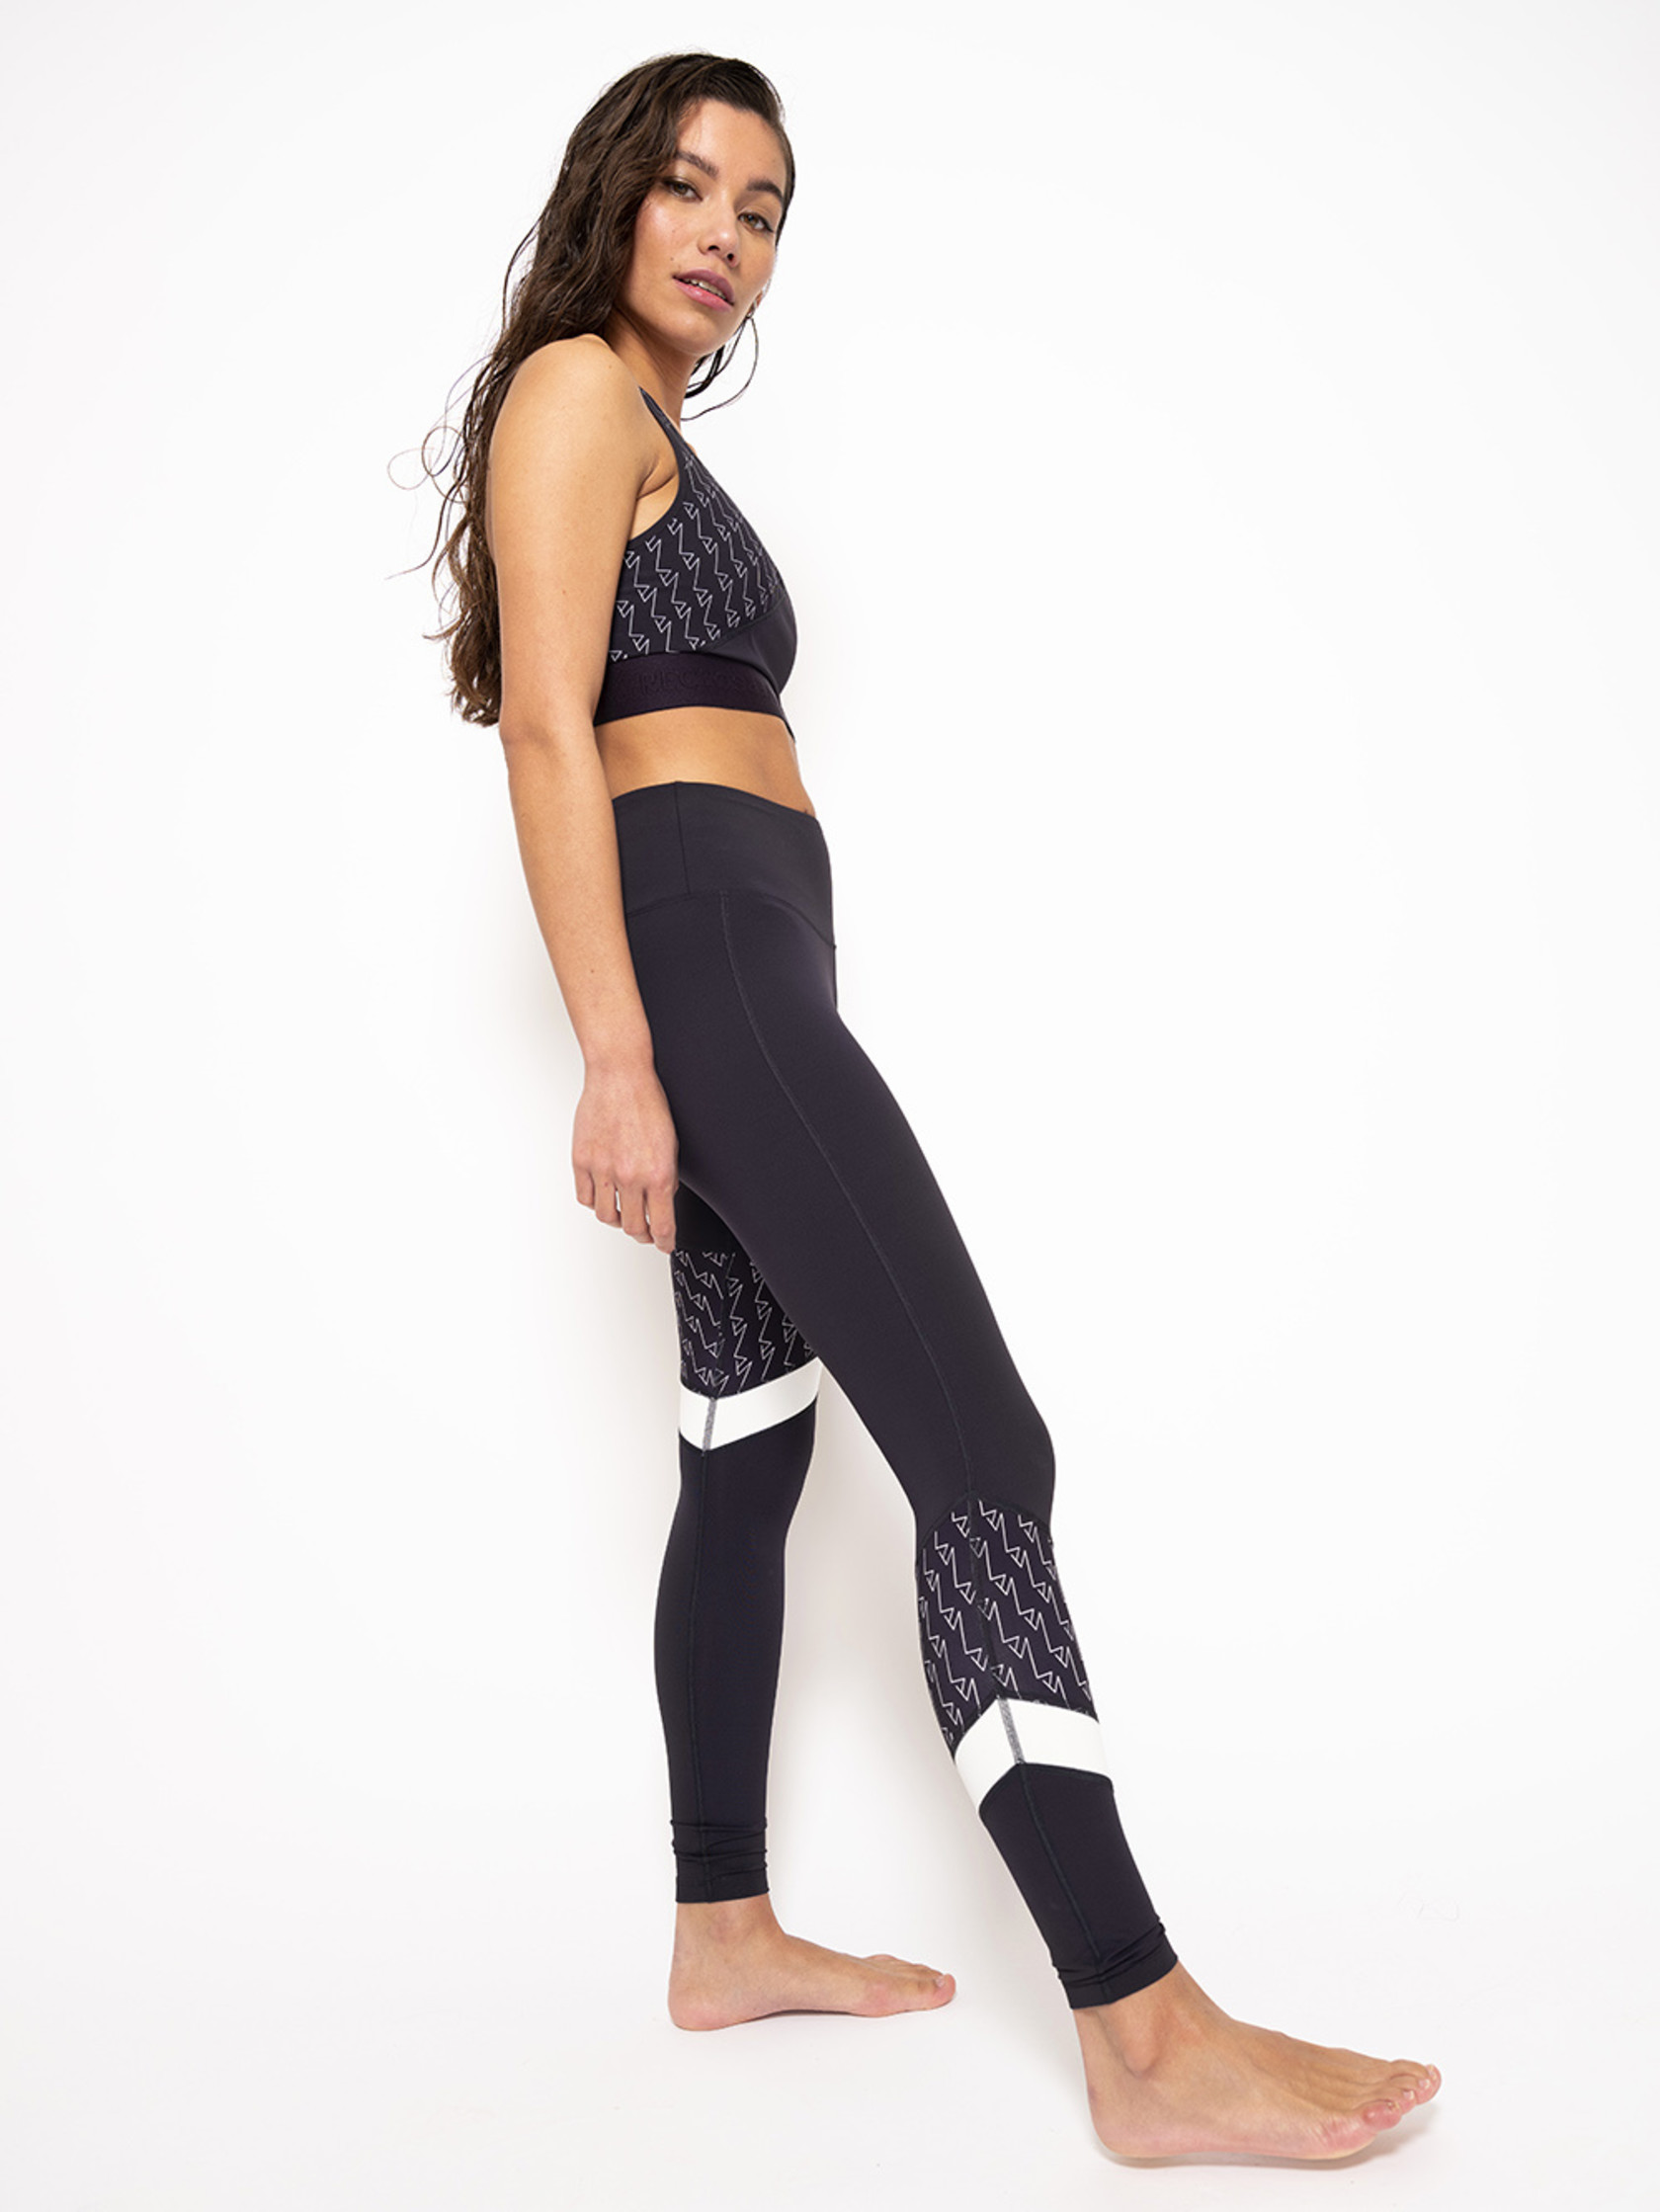 Skyfall legging | RectoVerso sportswear for women - RectoVerso Sports